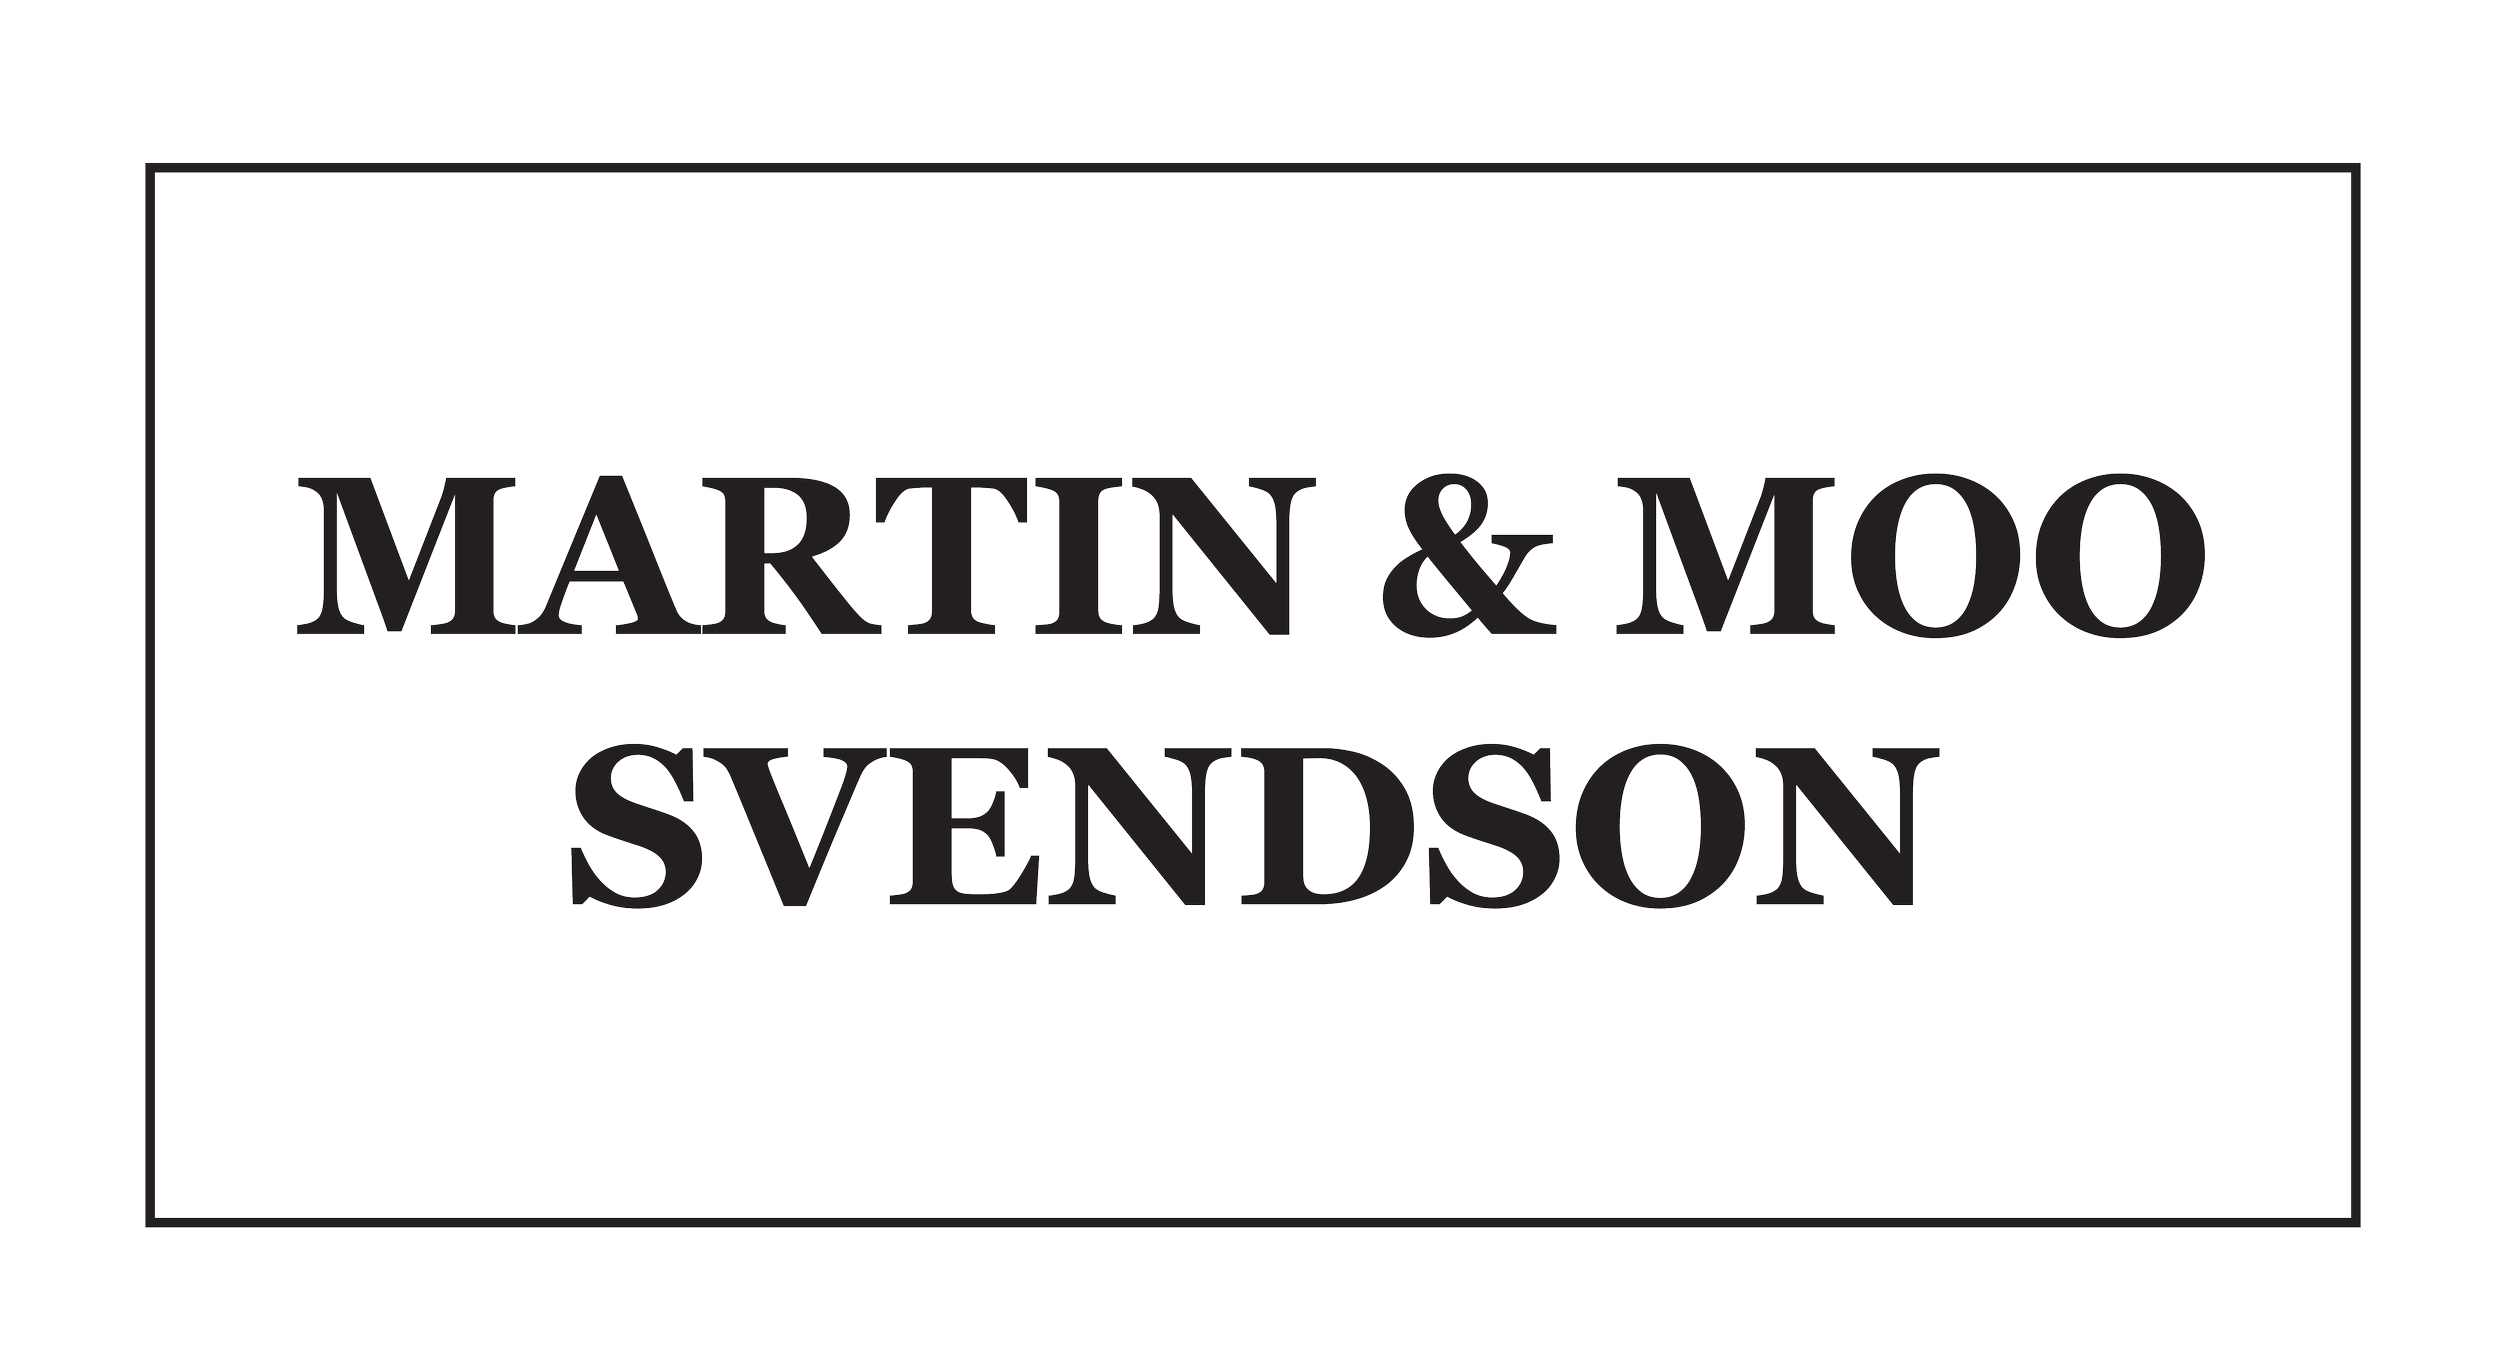 SVENDSON-martin-moo2.png